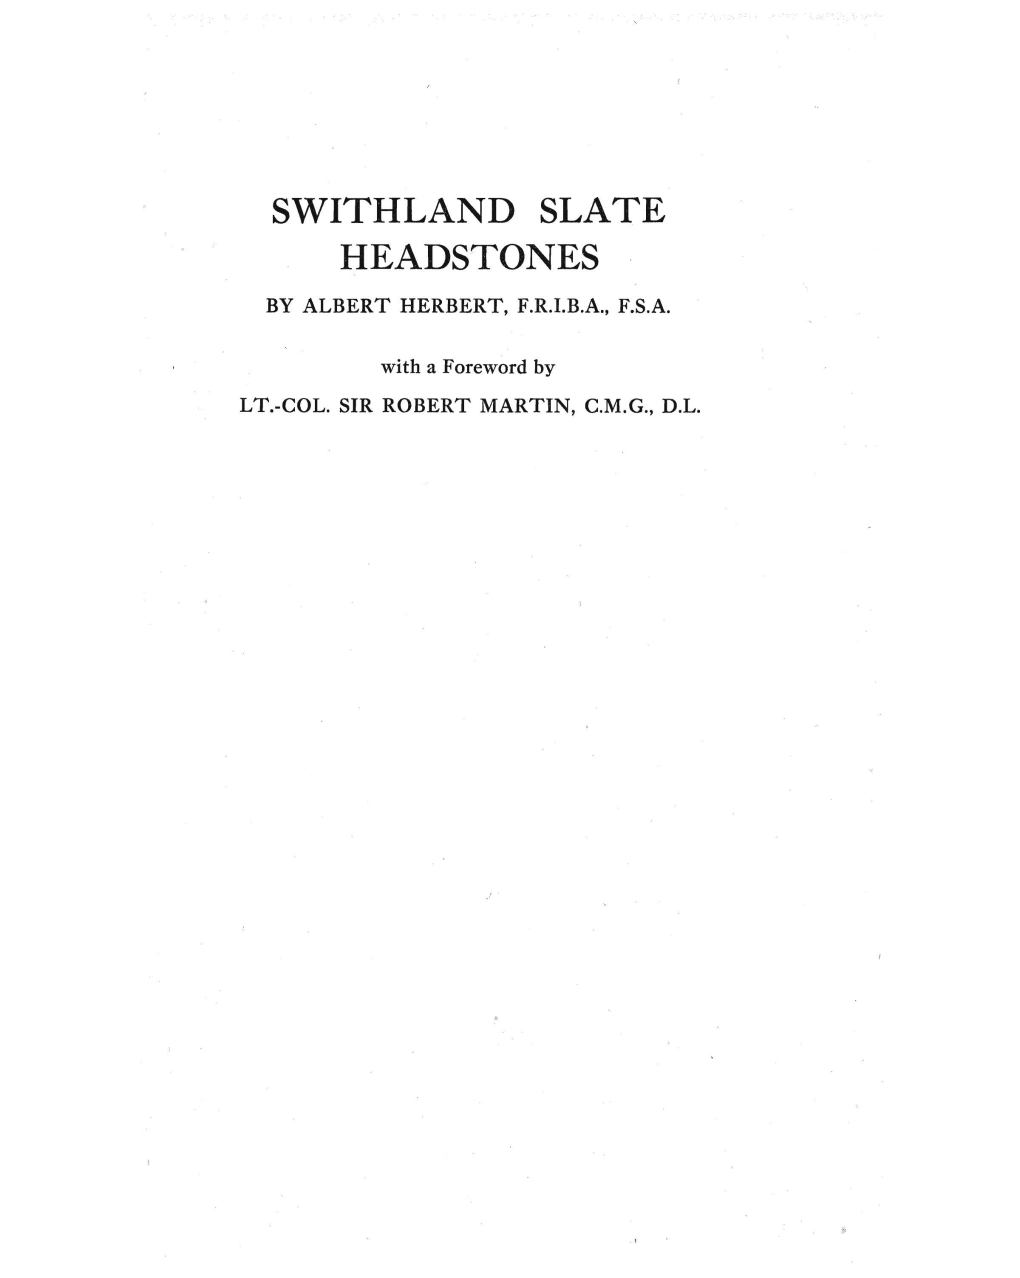 Swithland Slate Headstones by Albert Herbert, F.R.I.B.A., F.S.A